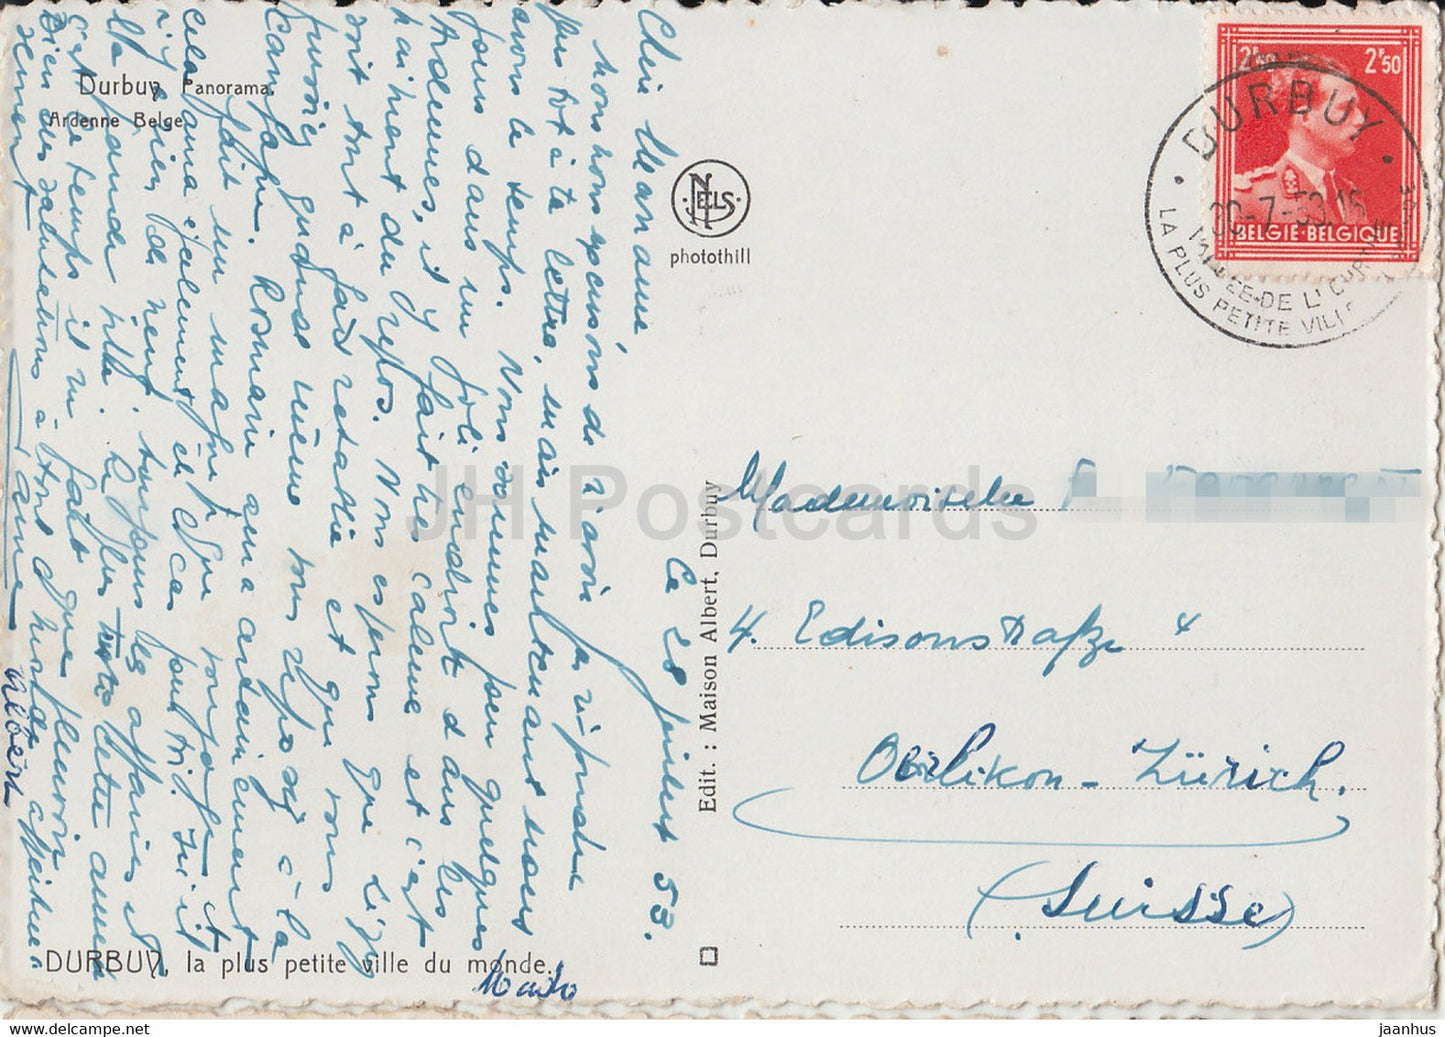 Durbuy - Panorama - Ardenne Belge - alte Postkarte - 1953 - Belgien - gebraucht